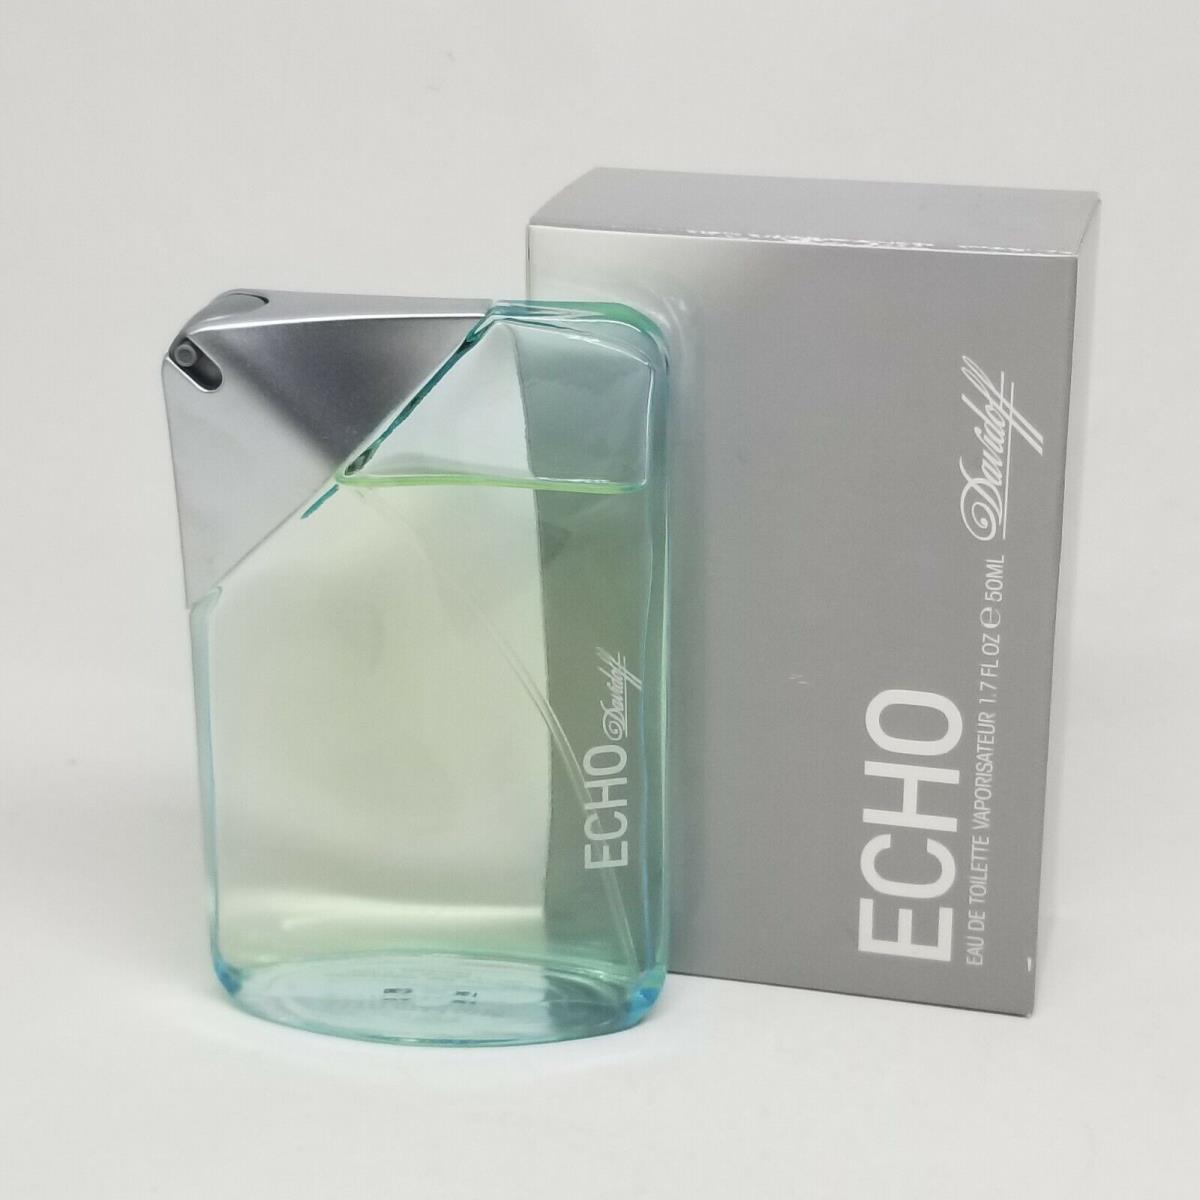 Davidoff Echo For Men 1.7 Oz 50ml Eau De Toilette Spray